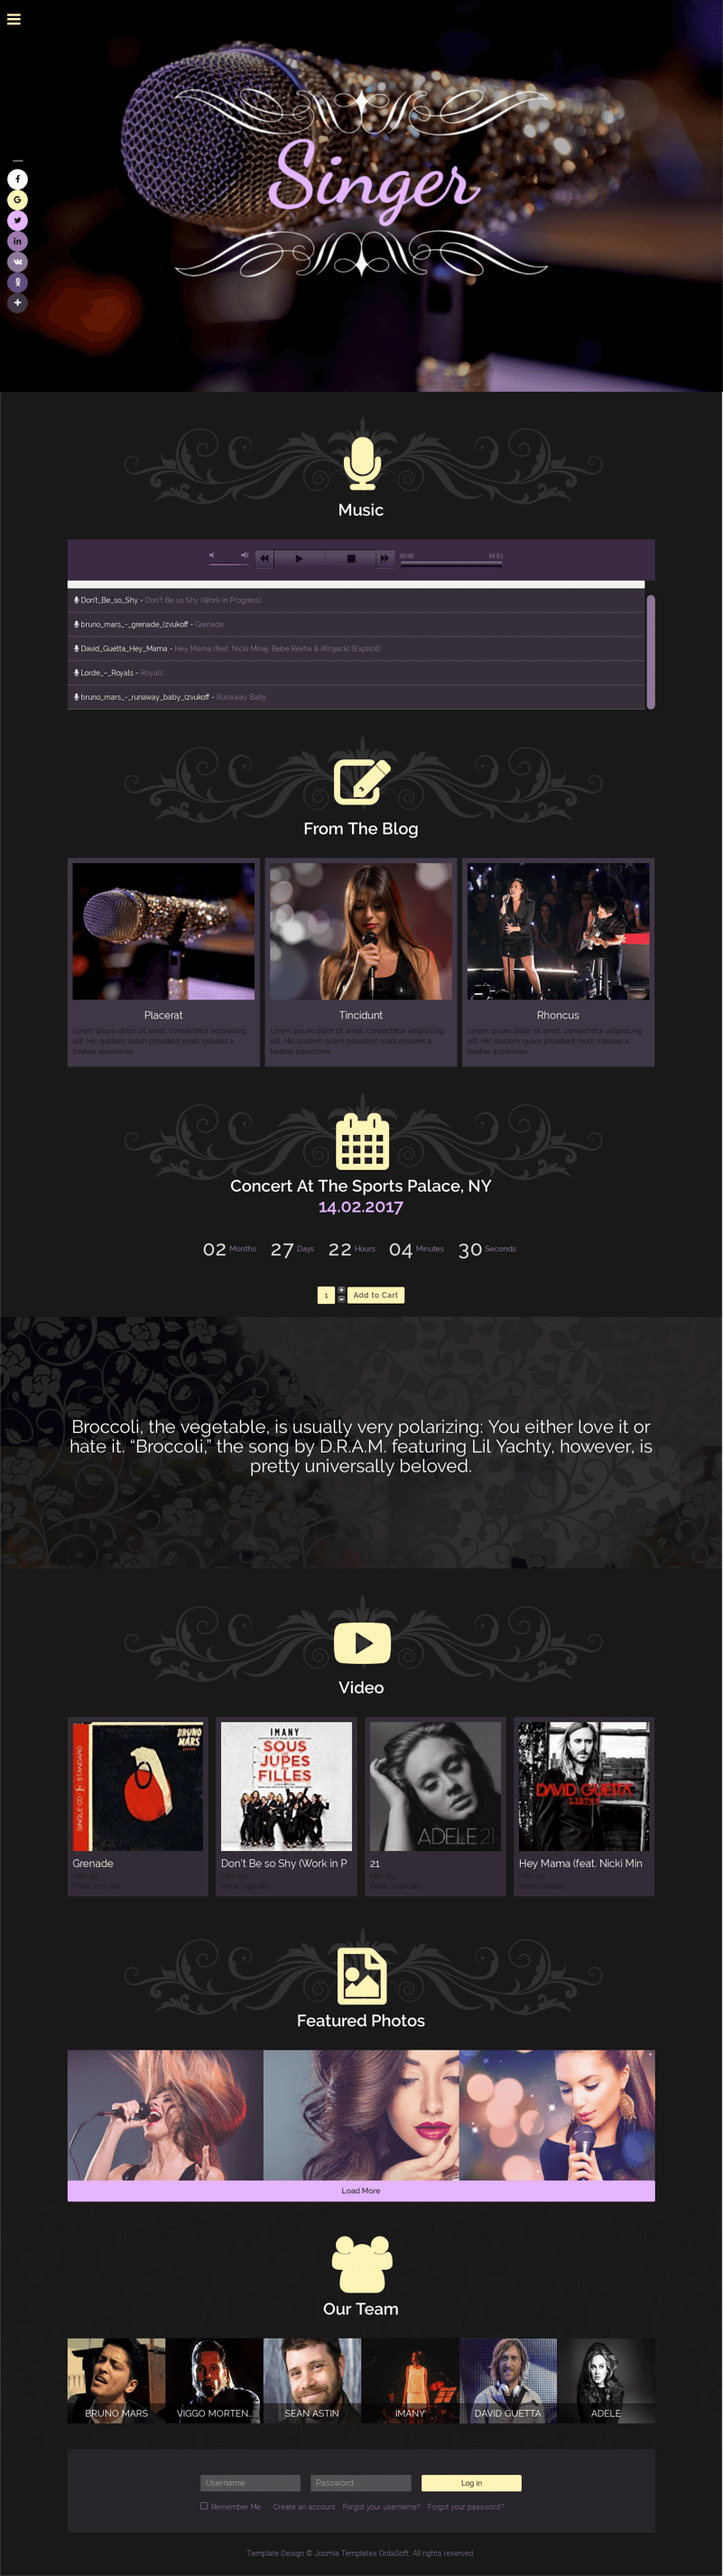 Singer, Joomla Music template for create Joomla Music website